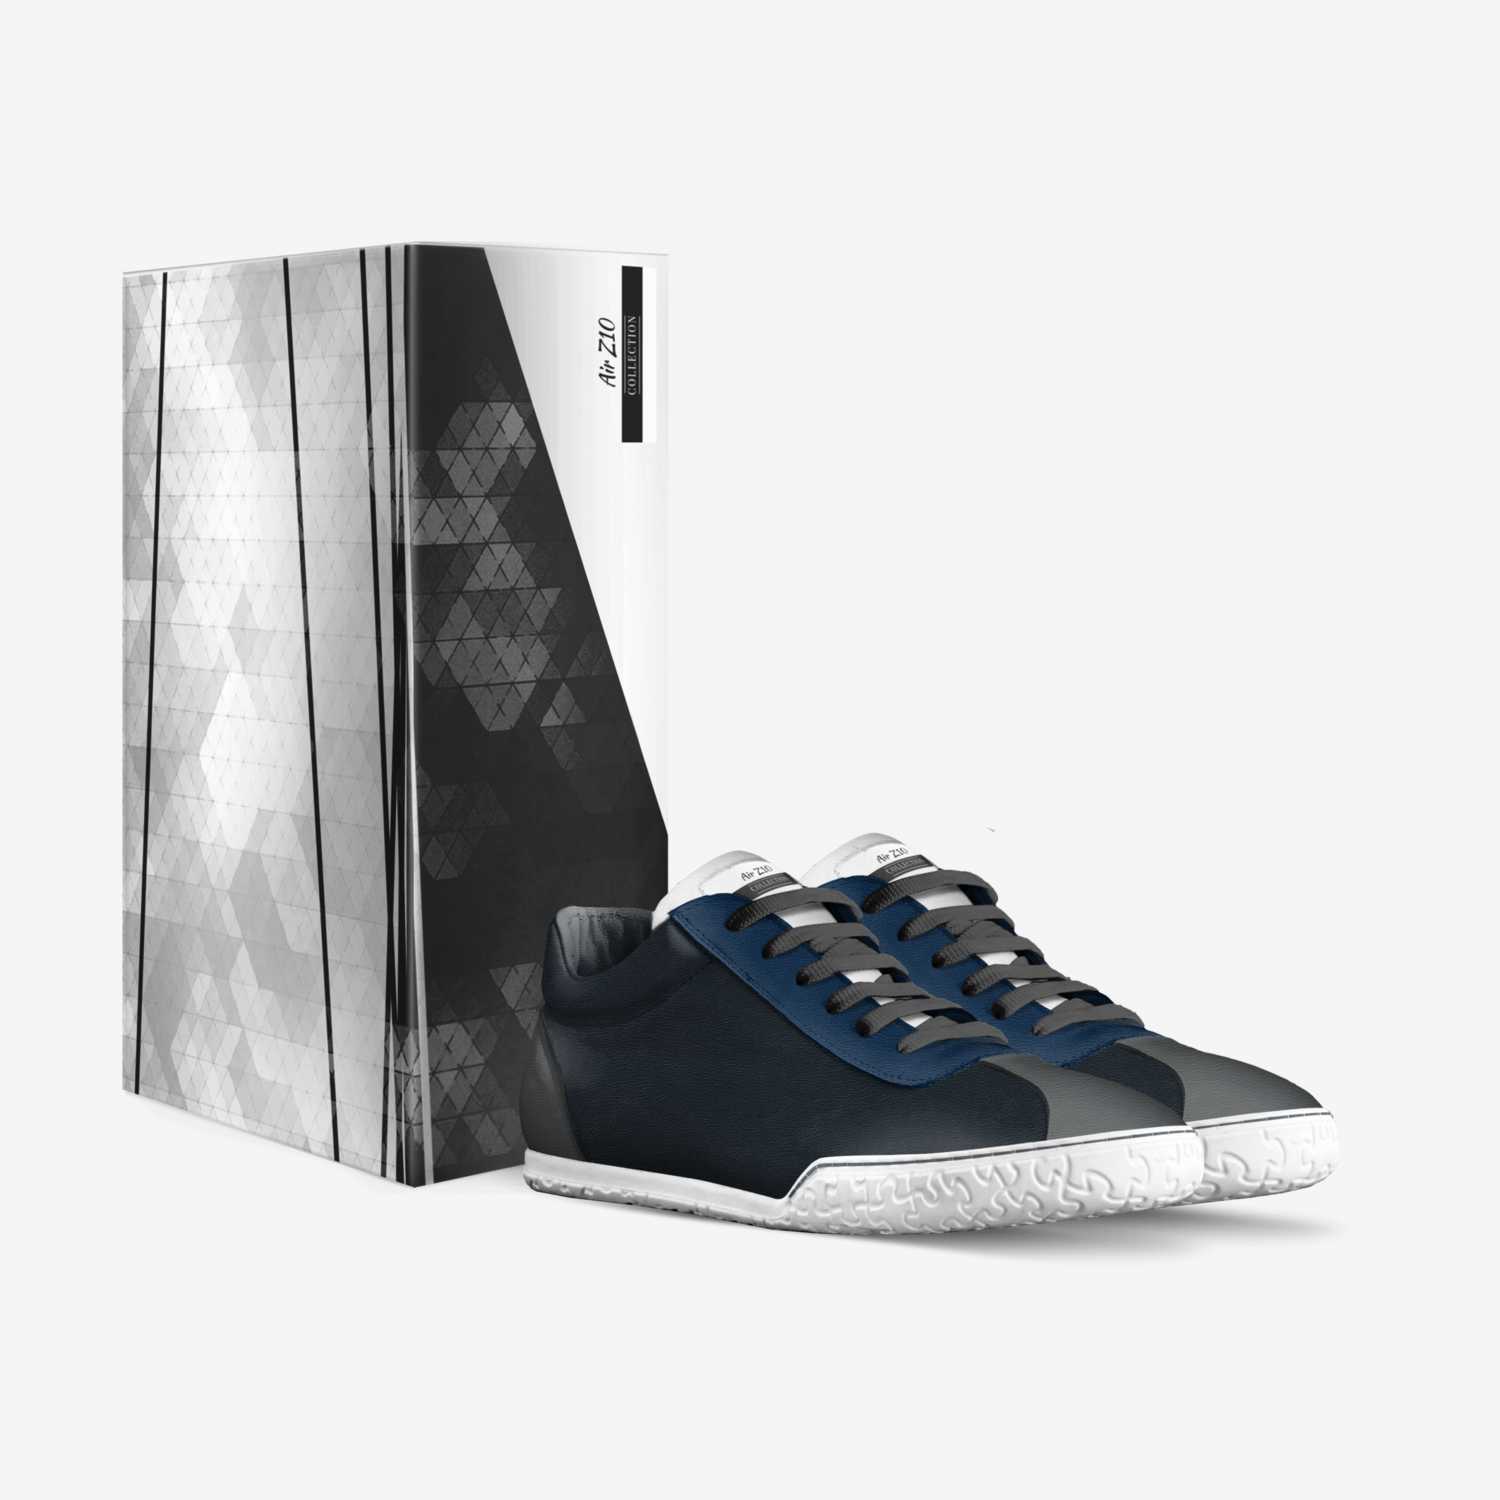 Air Z10 custom made in Italy shoes by Keegan Jay Zinn | Box view